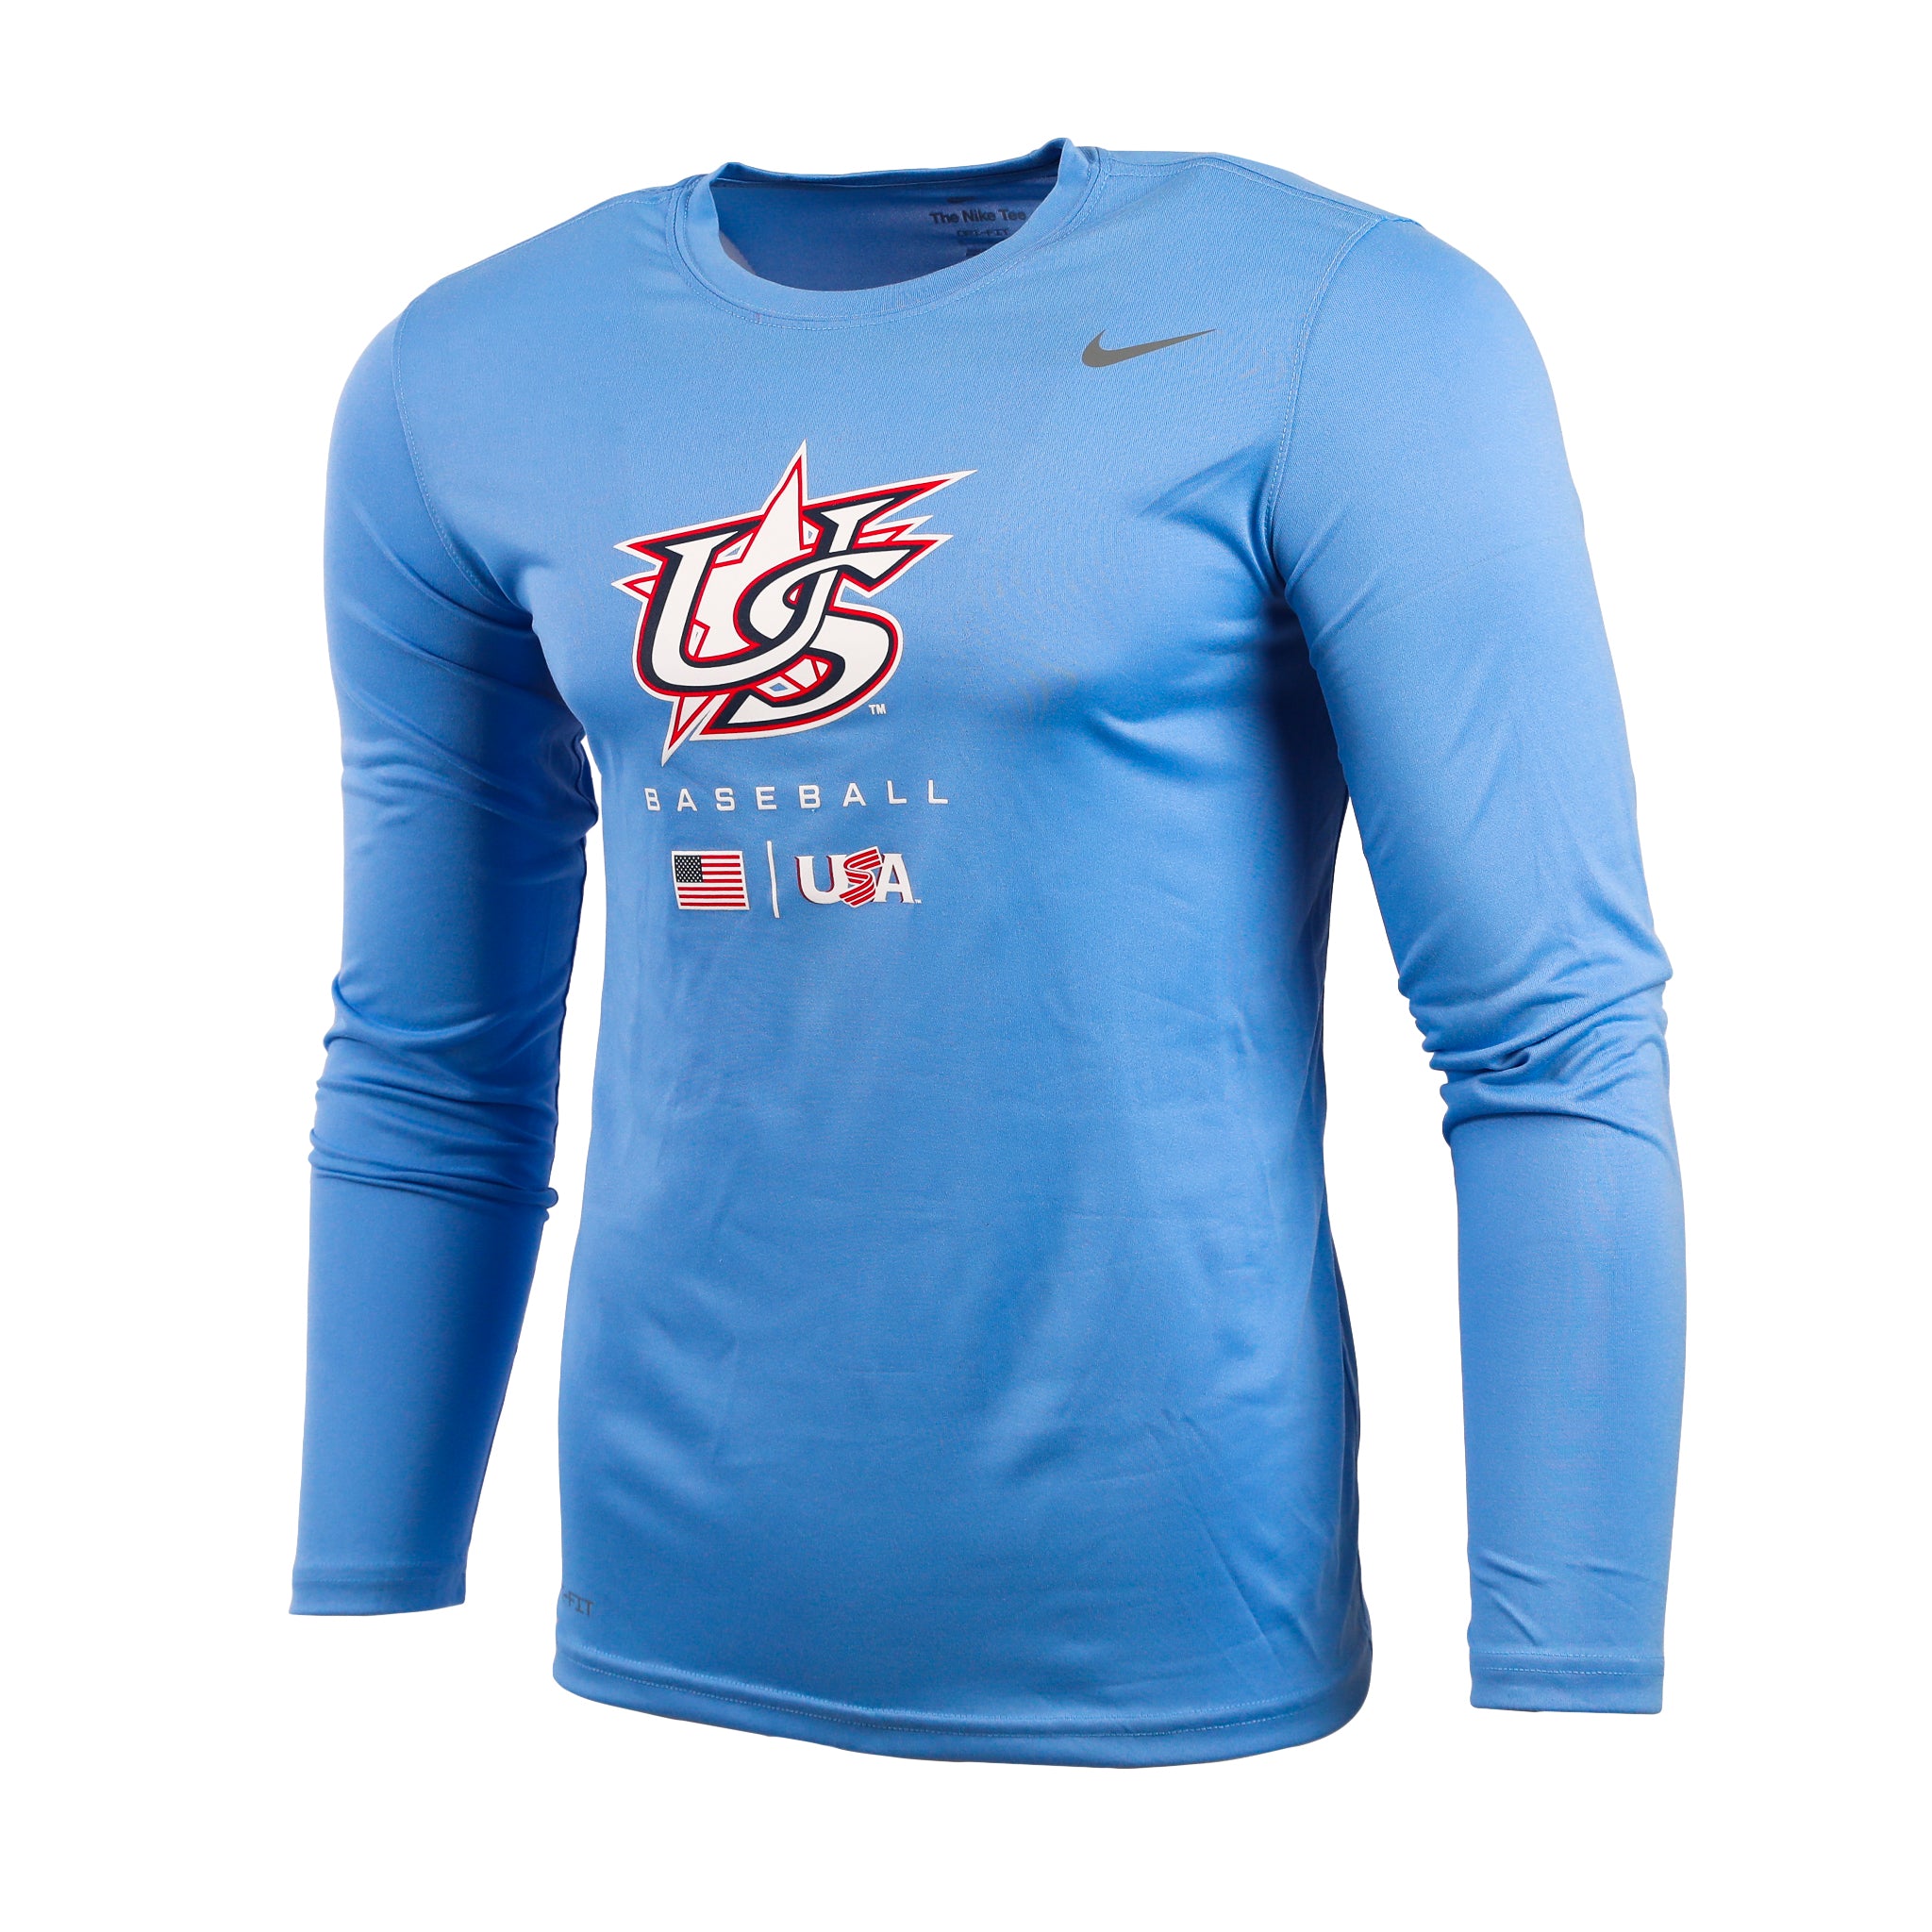 Nike - Essential Printed Stretch-jersey T-shirt - Sky blue